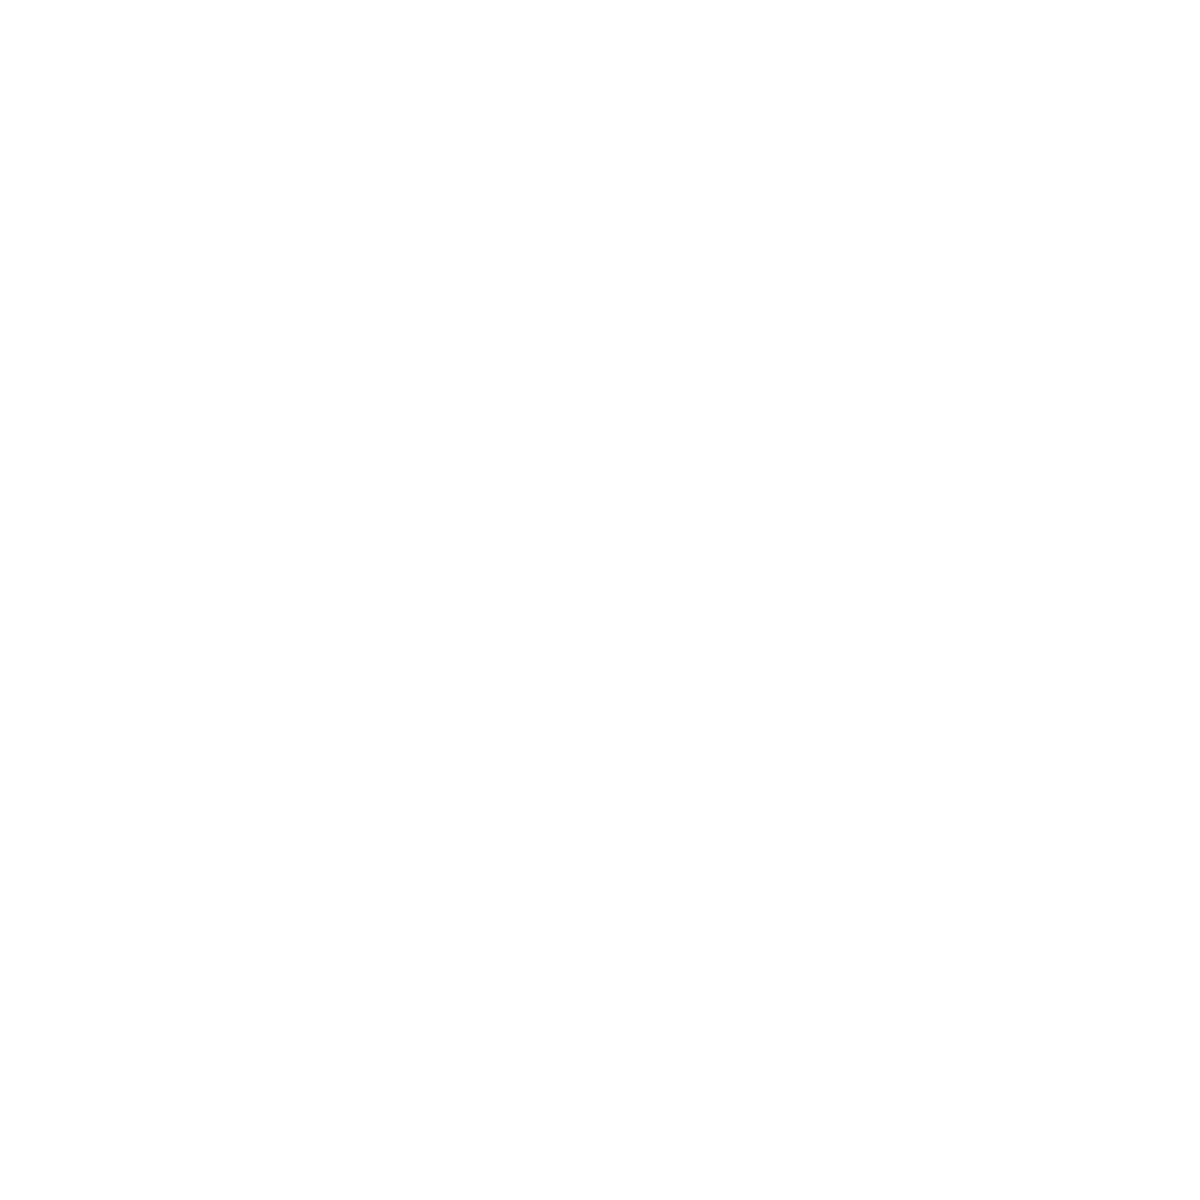 Azure Leadership Group